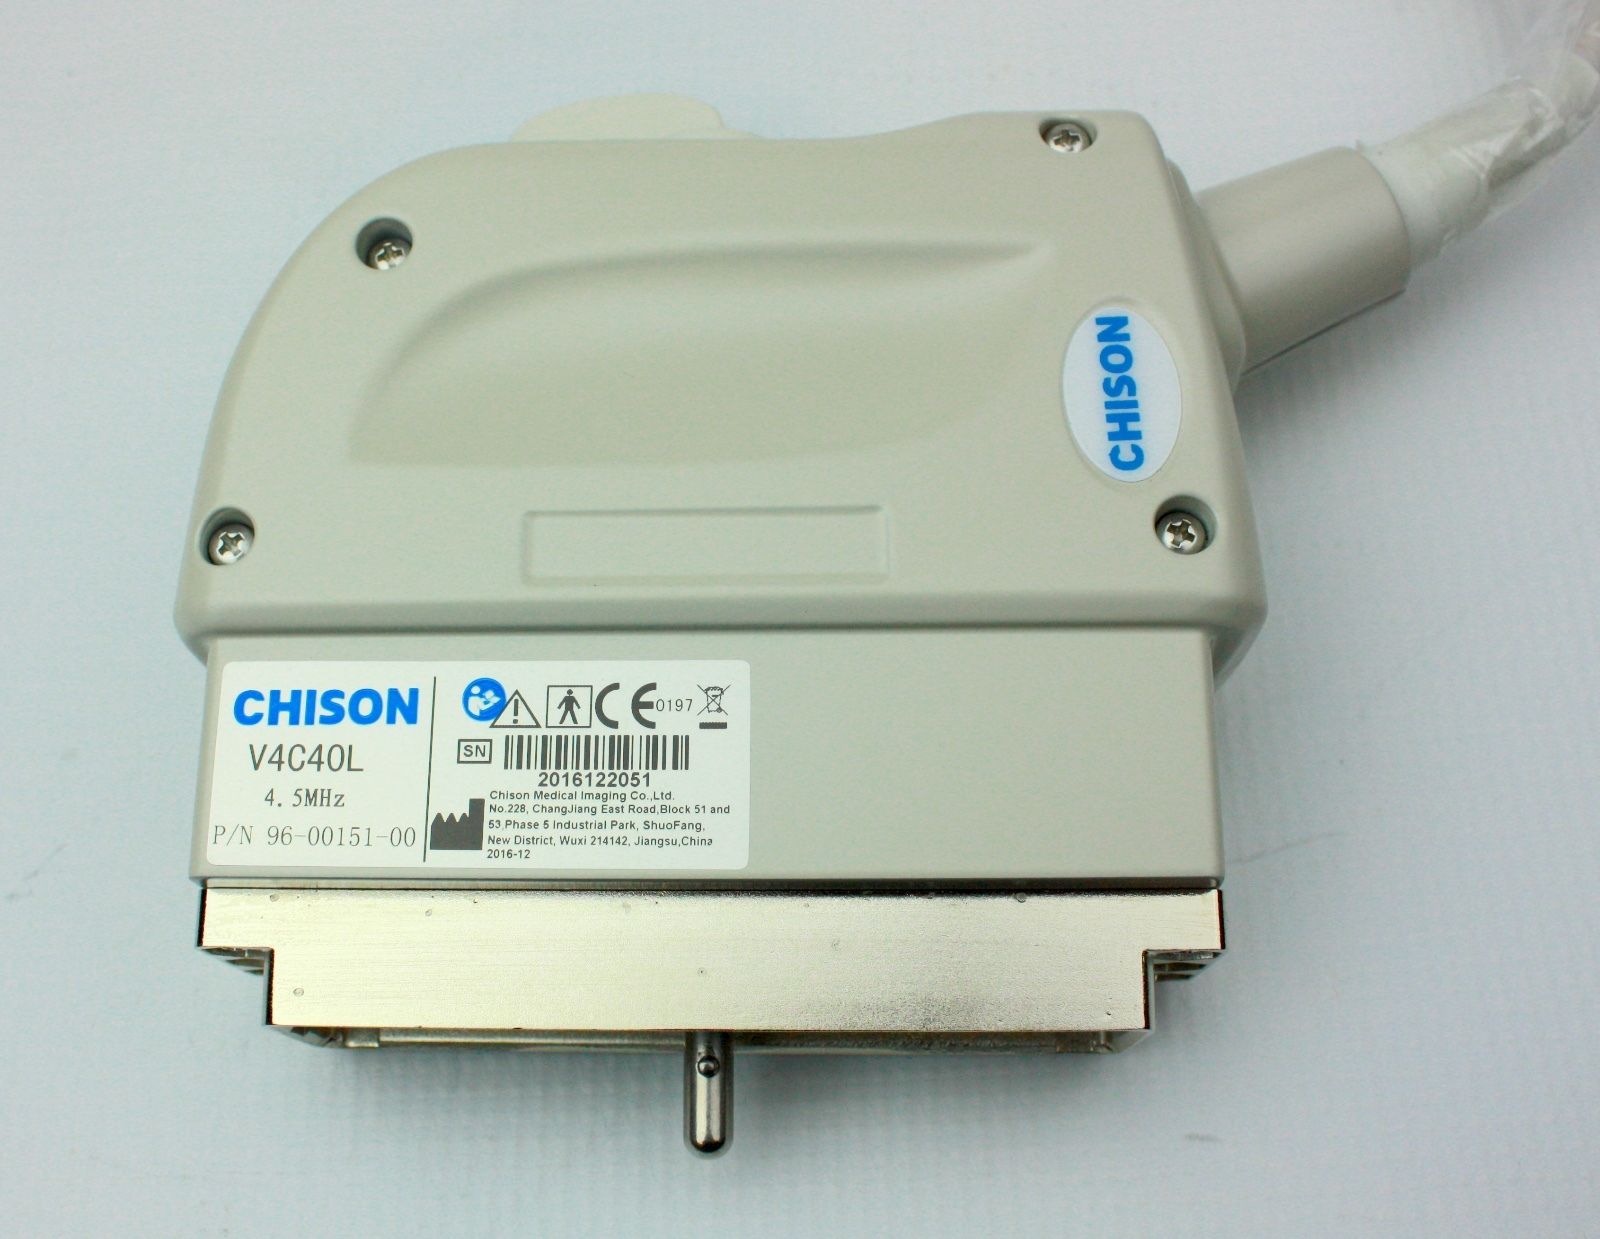 4D Probe Transducer V4C40L, 4.5MHz, For Chison Q Series Ultrasounds DIAGNOSTIC ULTRASOUND MACHINES FOR SALE